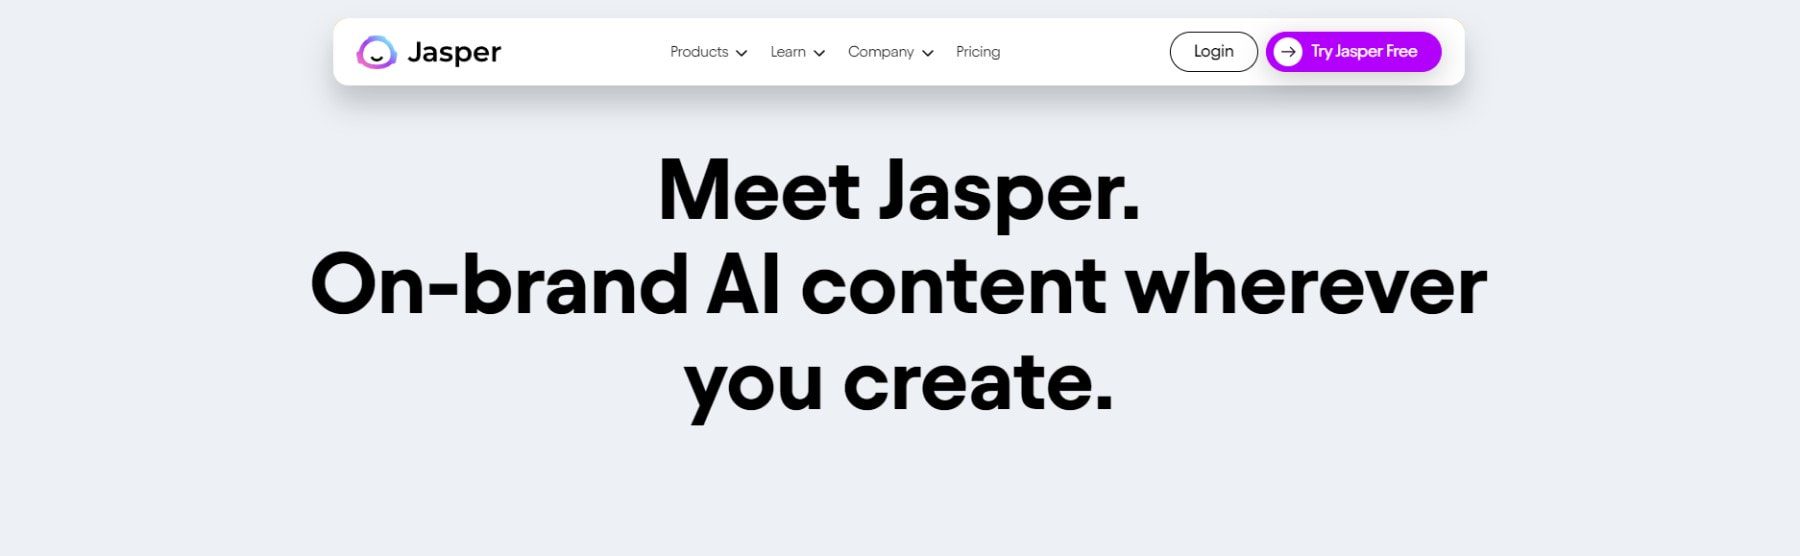 Jasper - Homepage